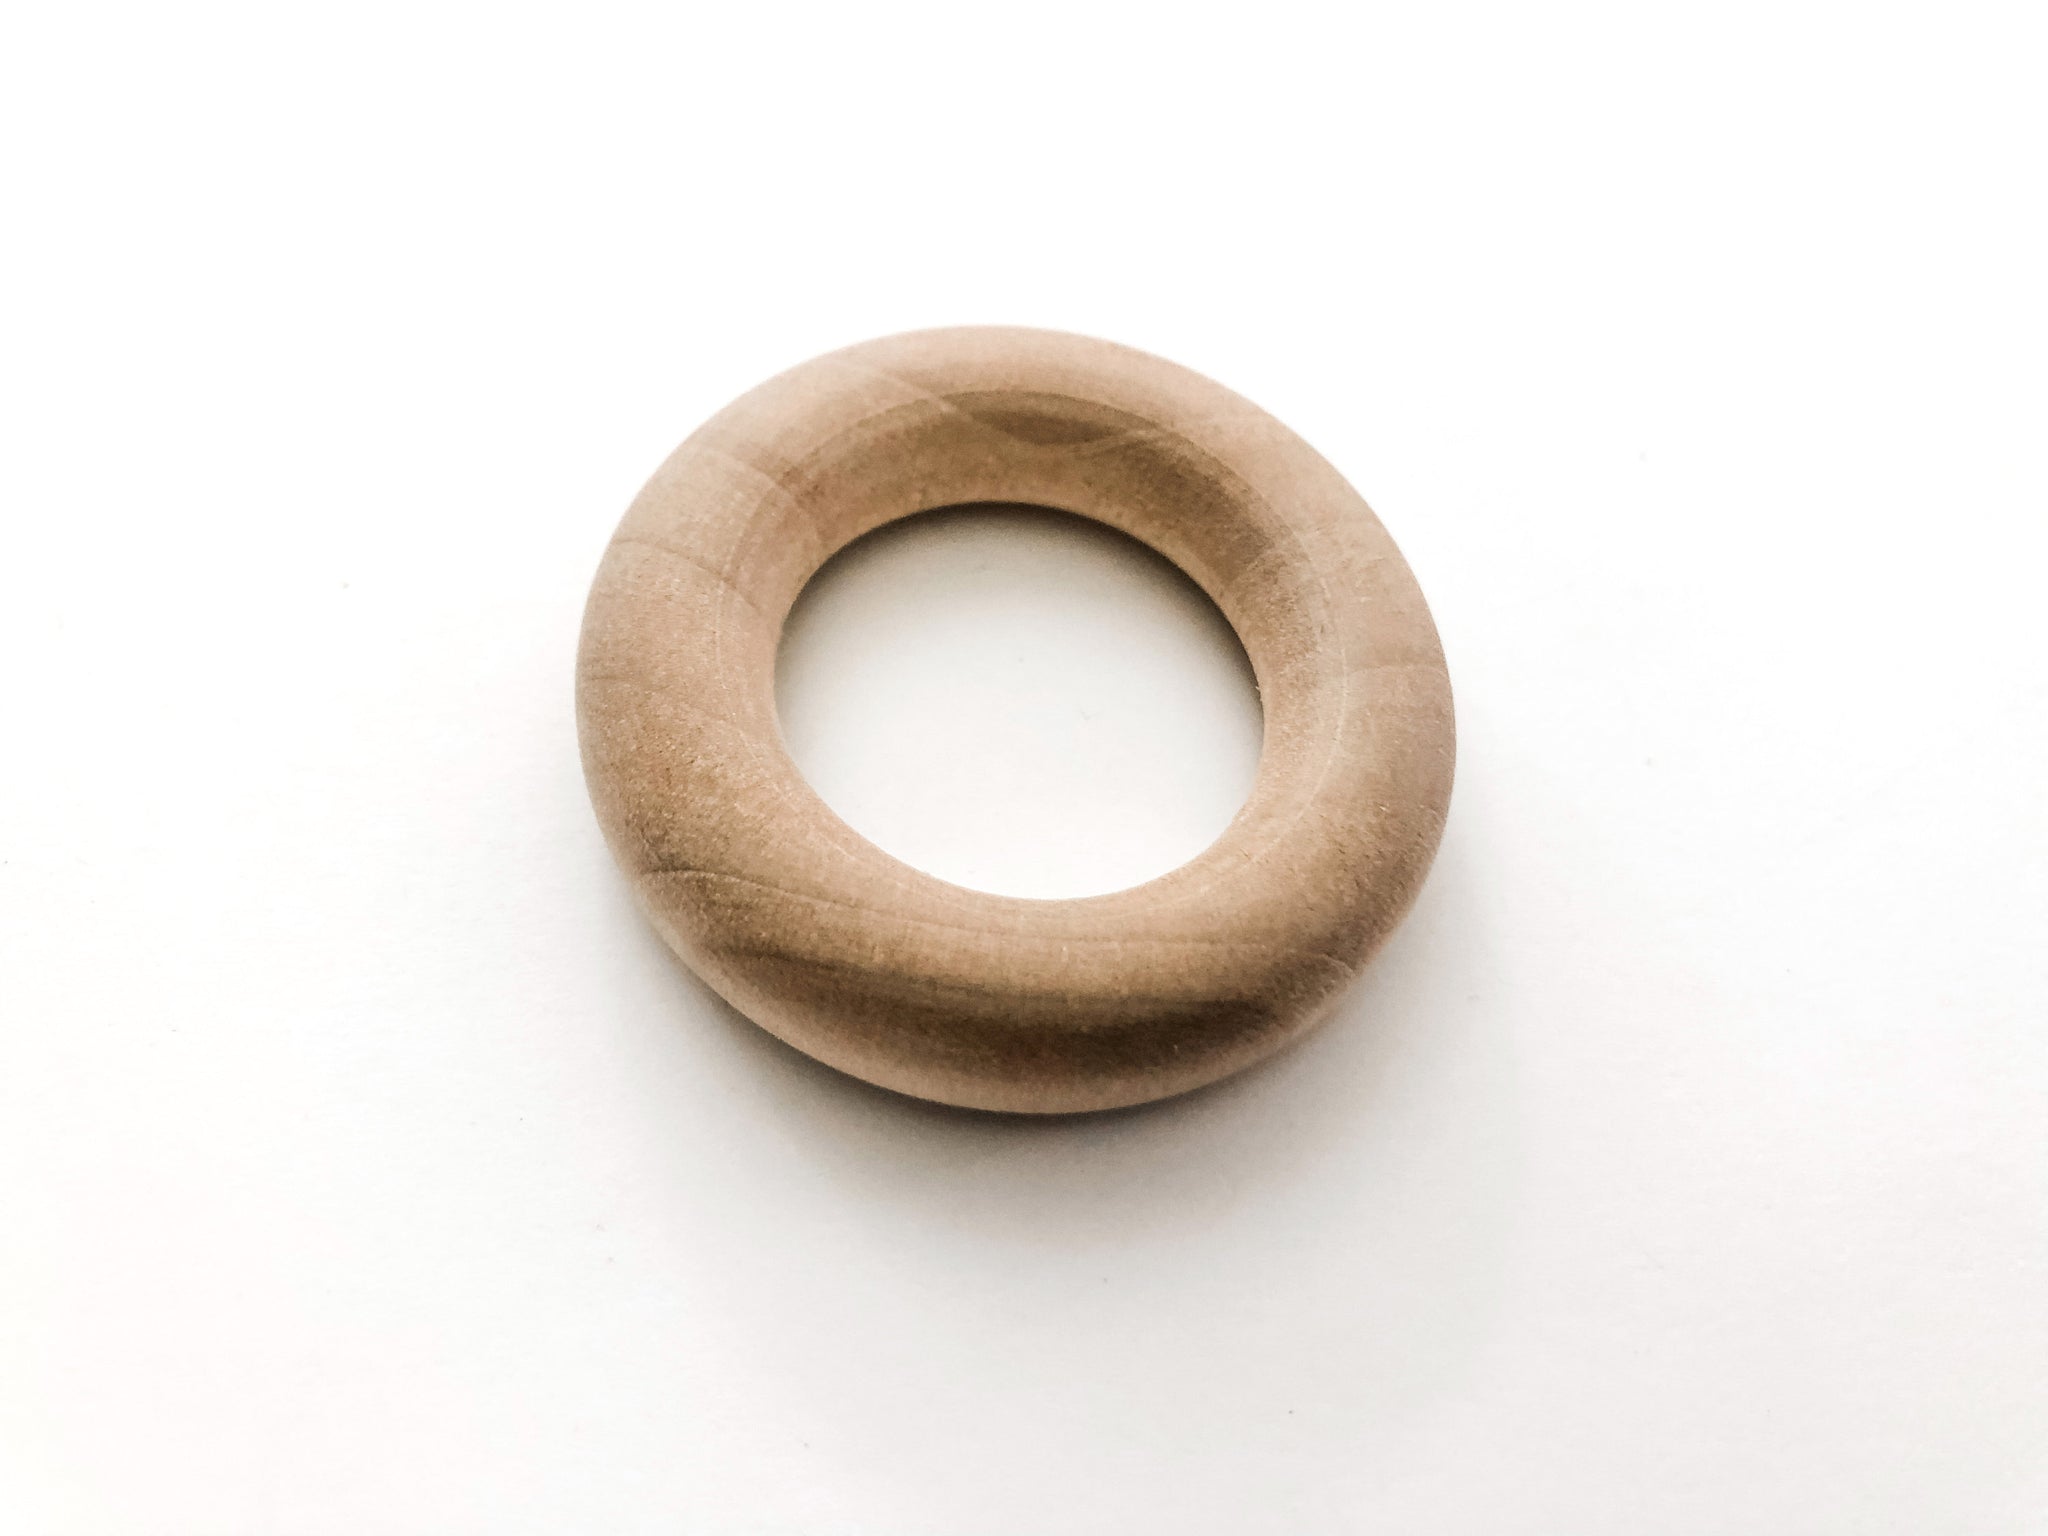 1.75 Inch Round Wood Rings - Beech Wood - Wood Jewelry Parts - Wood Toy Ring - Wood Jewelry Ring